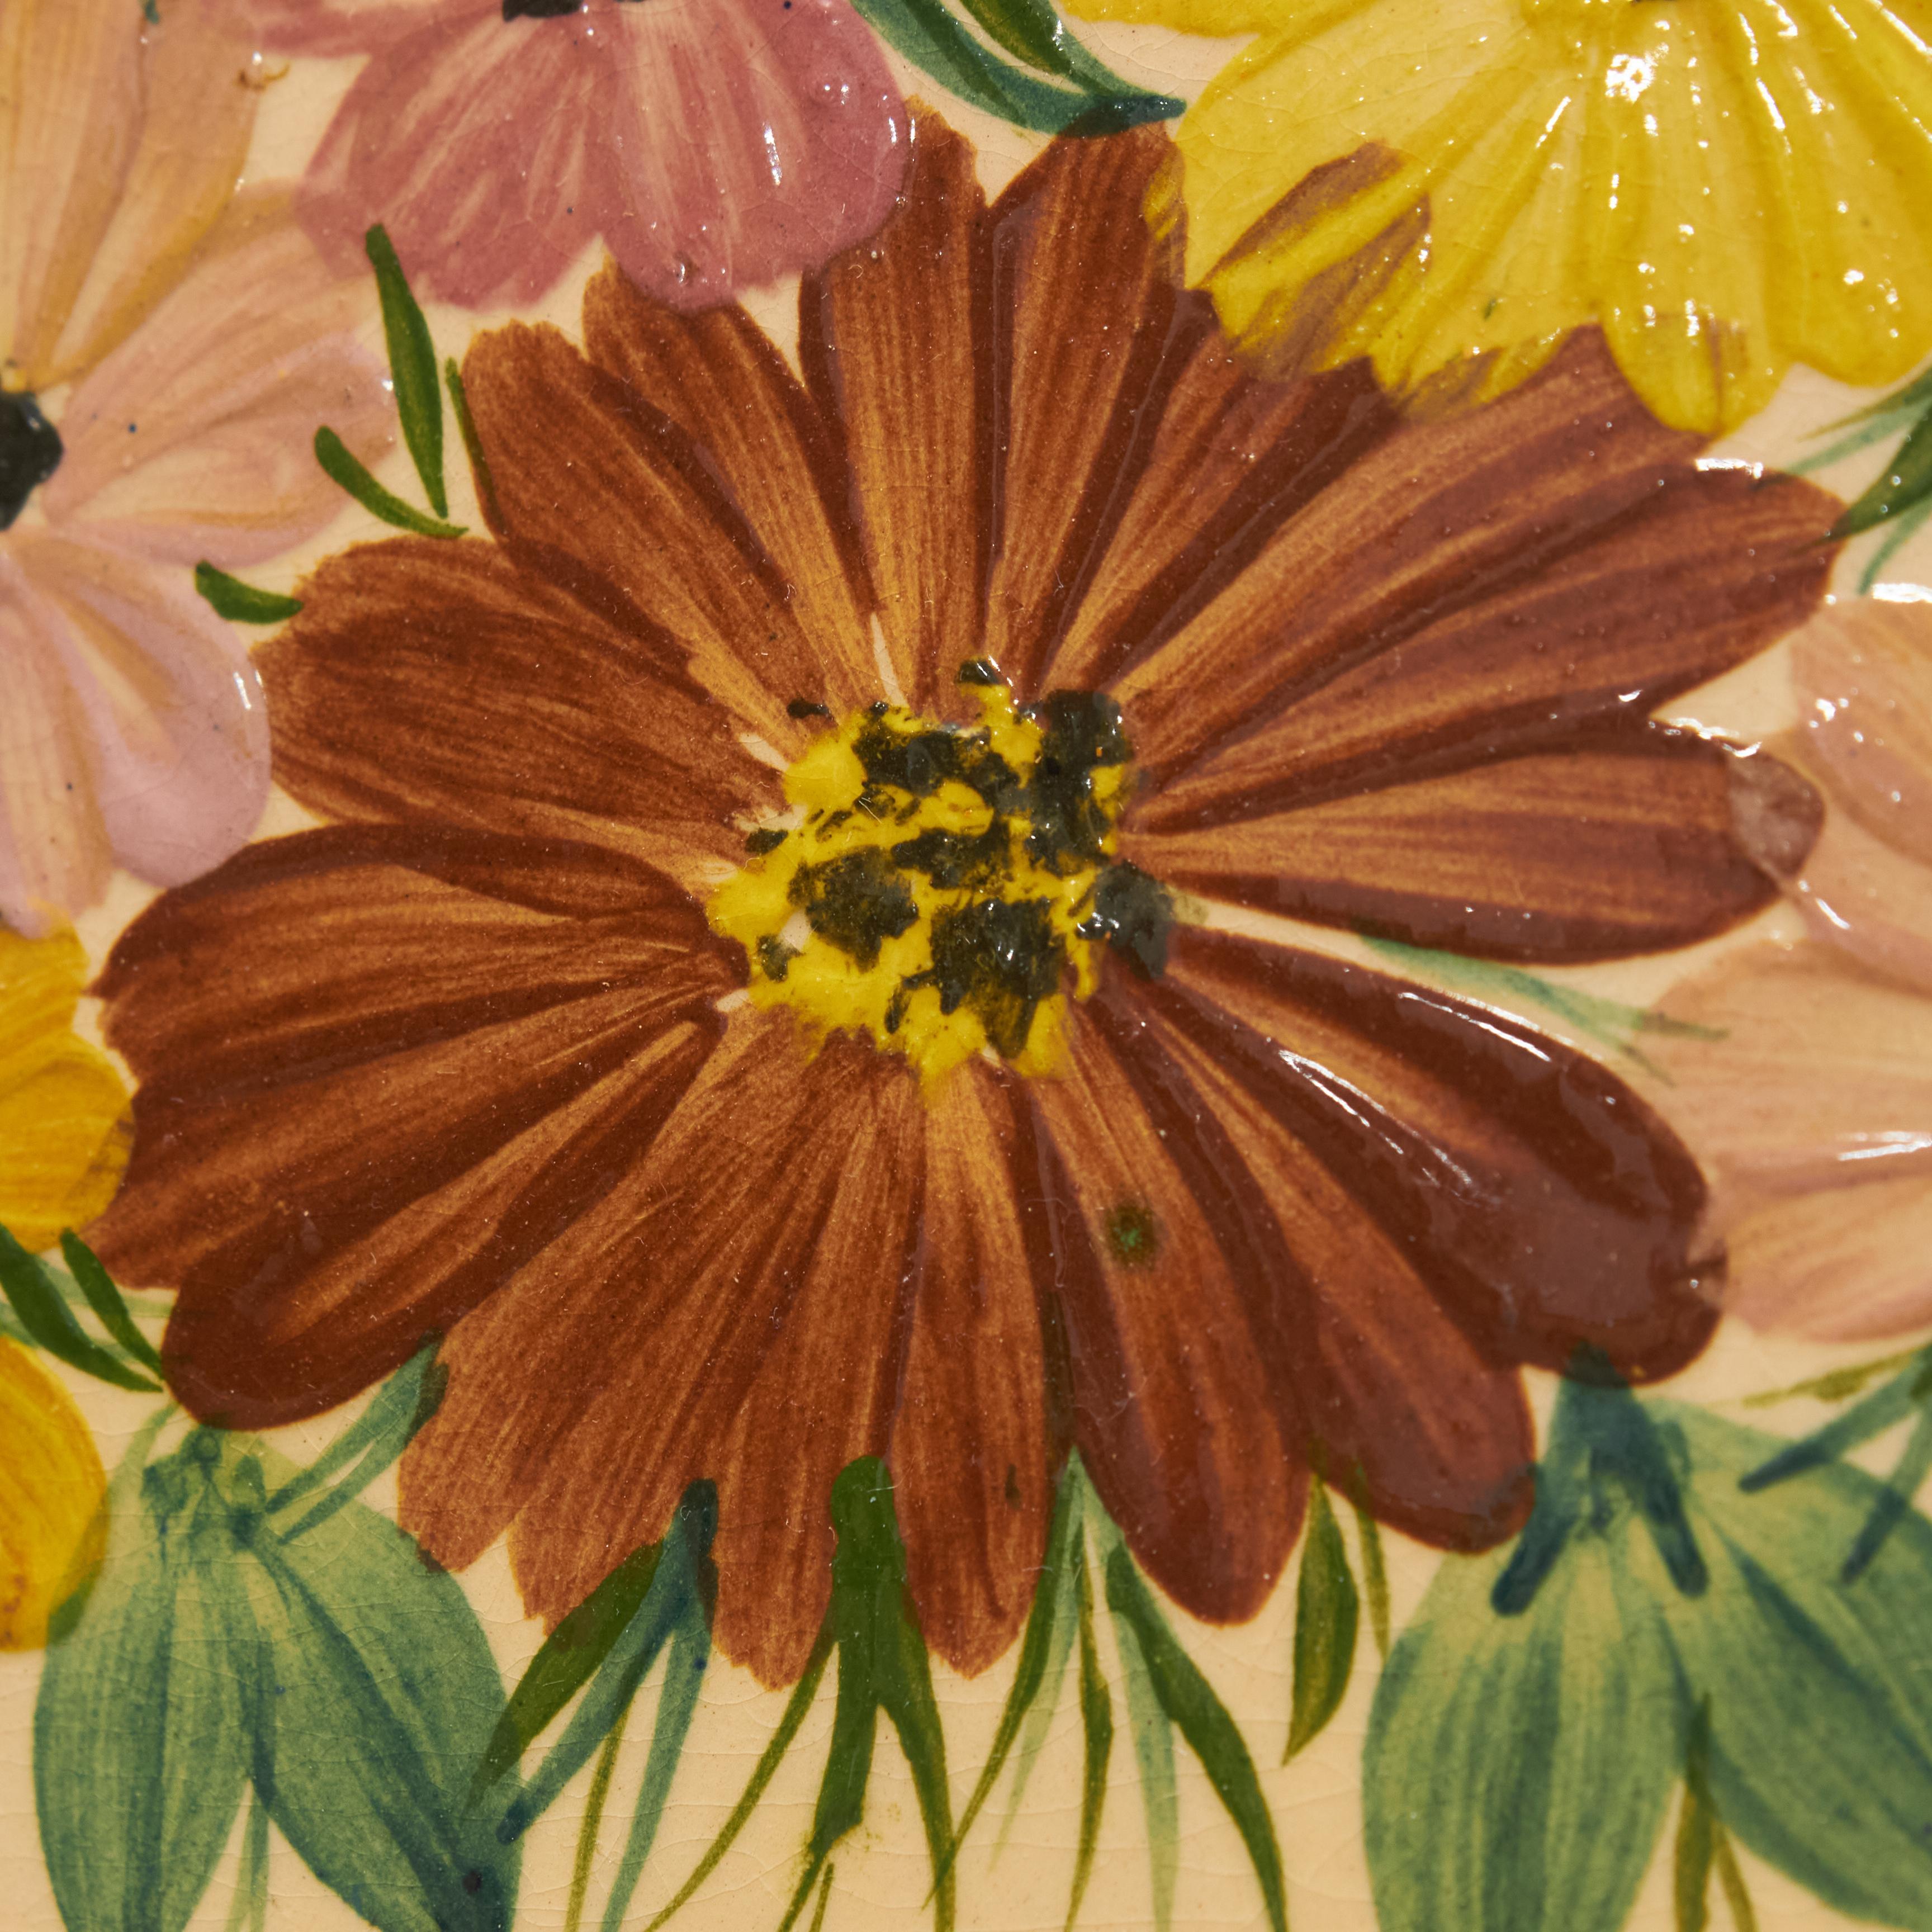 Diaz Costa Ceramic Hand Painted Flowers Artwork, circa 1960 For Sale 1